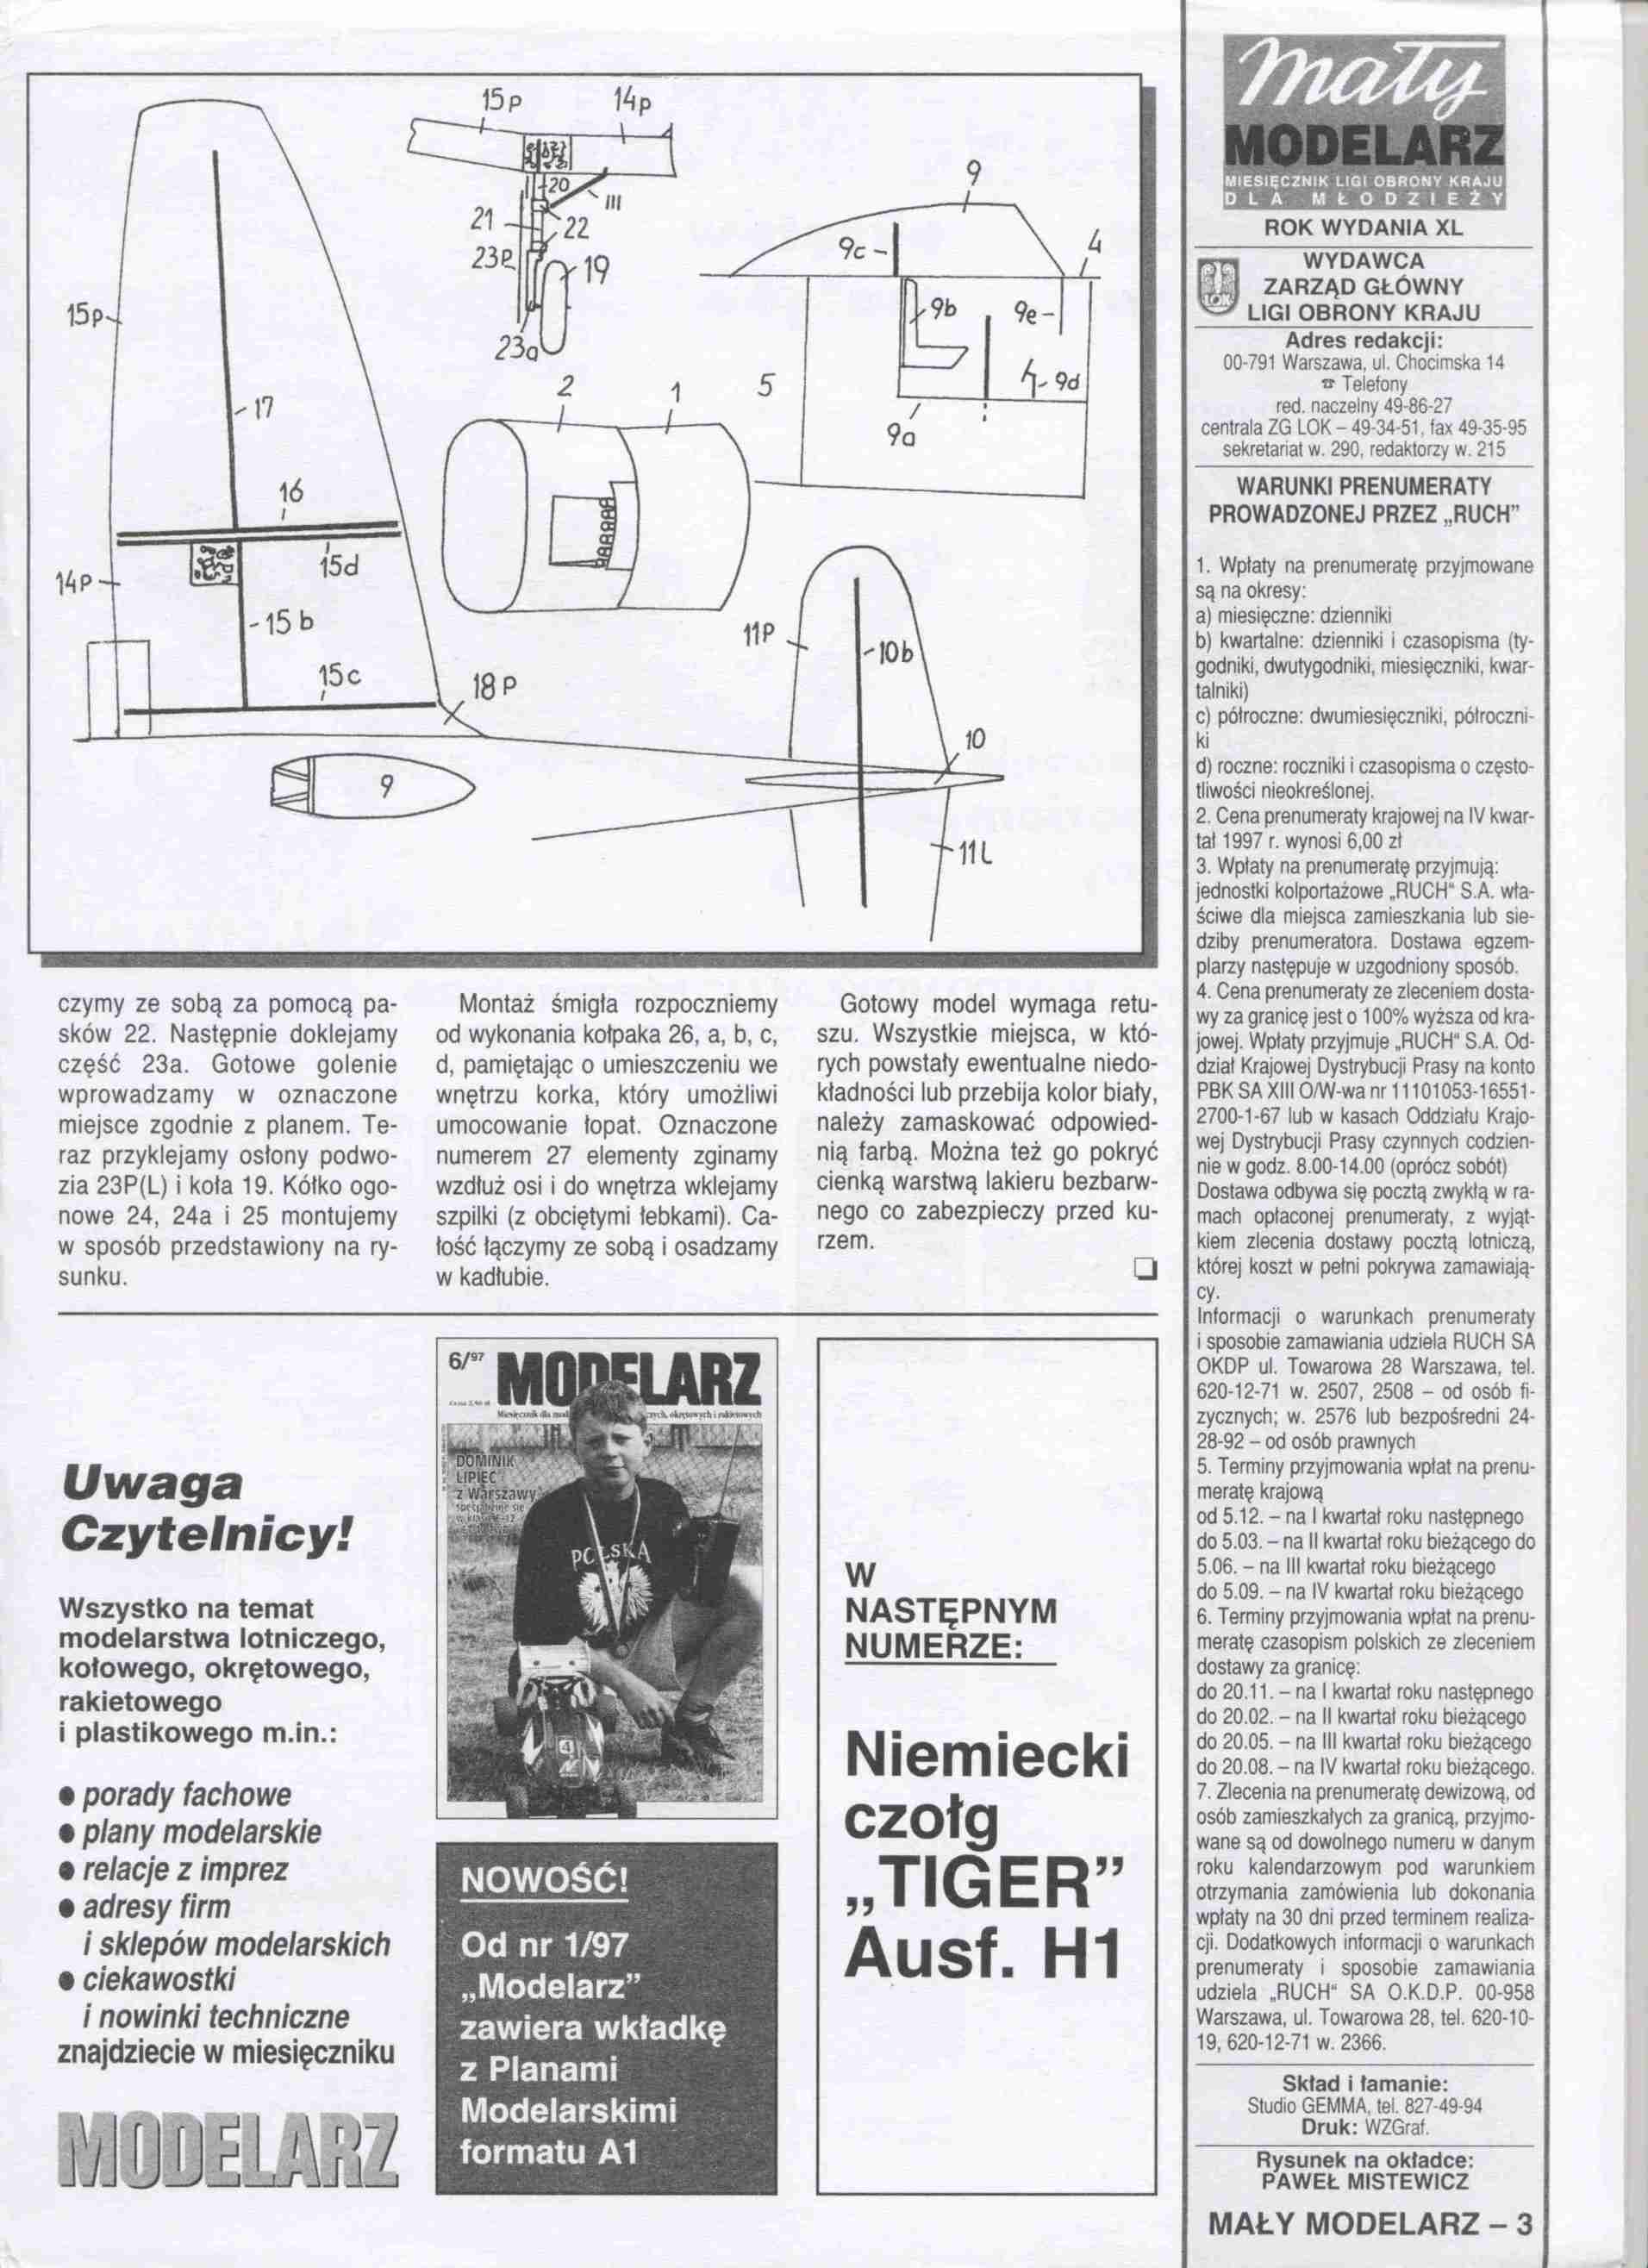 "Maly Modelarz" 9, 1997 3 с.